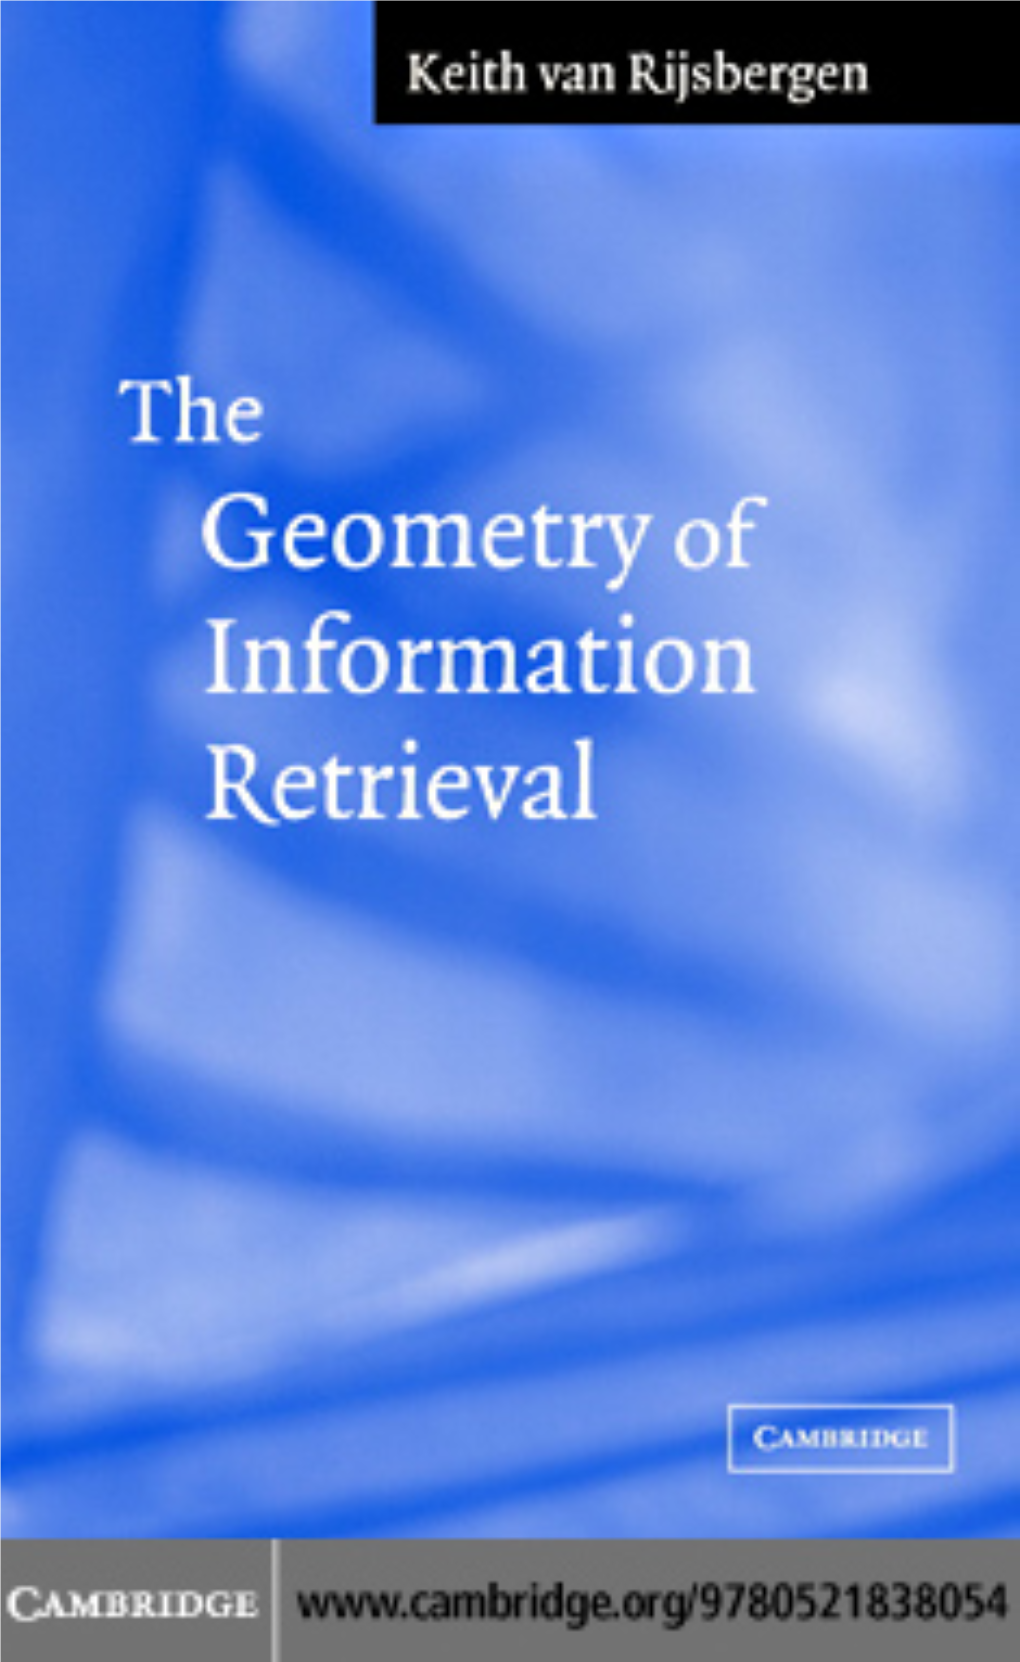 The Geometry of Information Retrieval